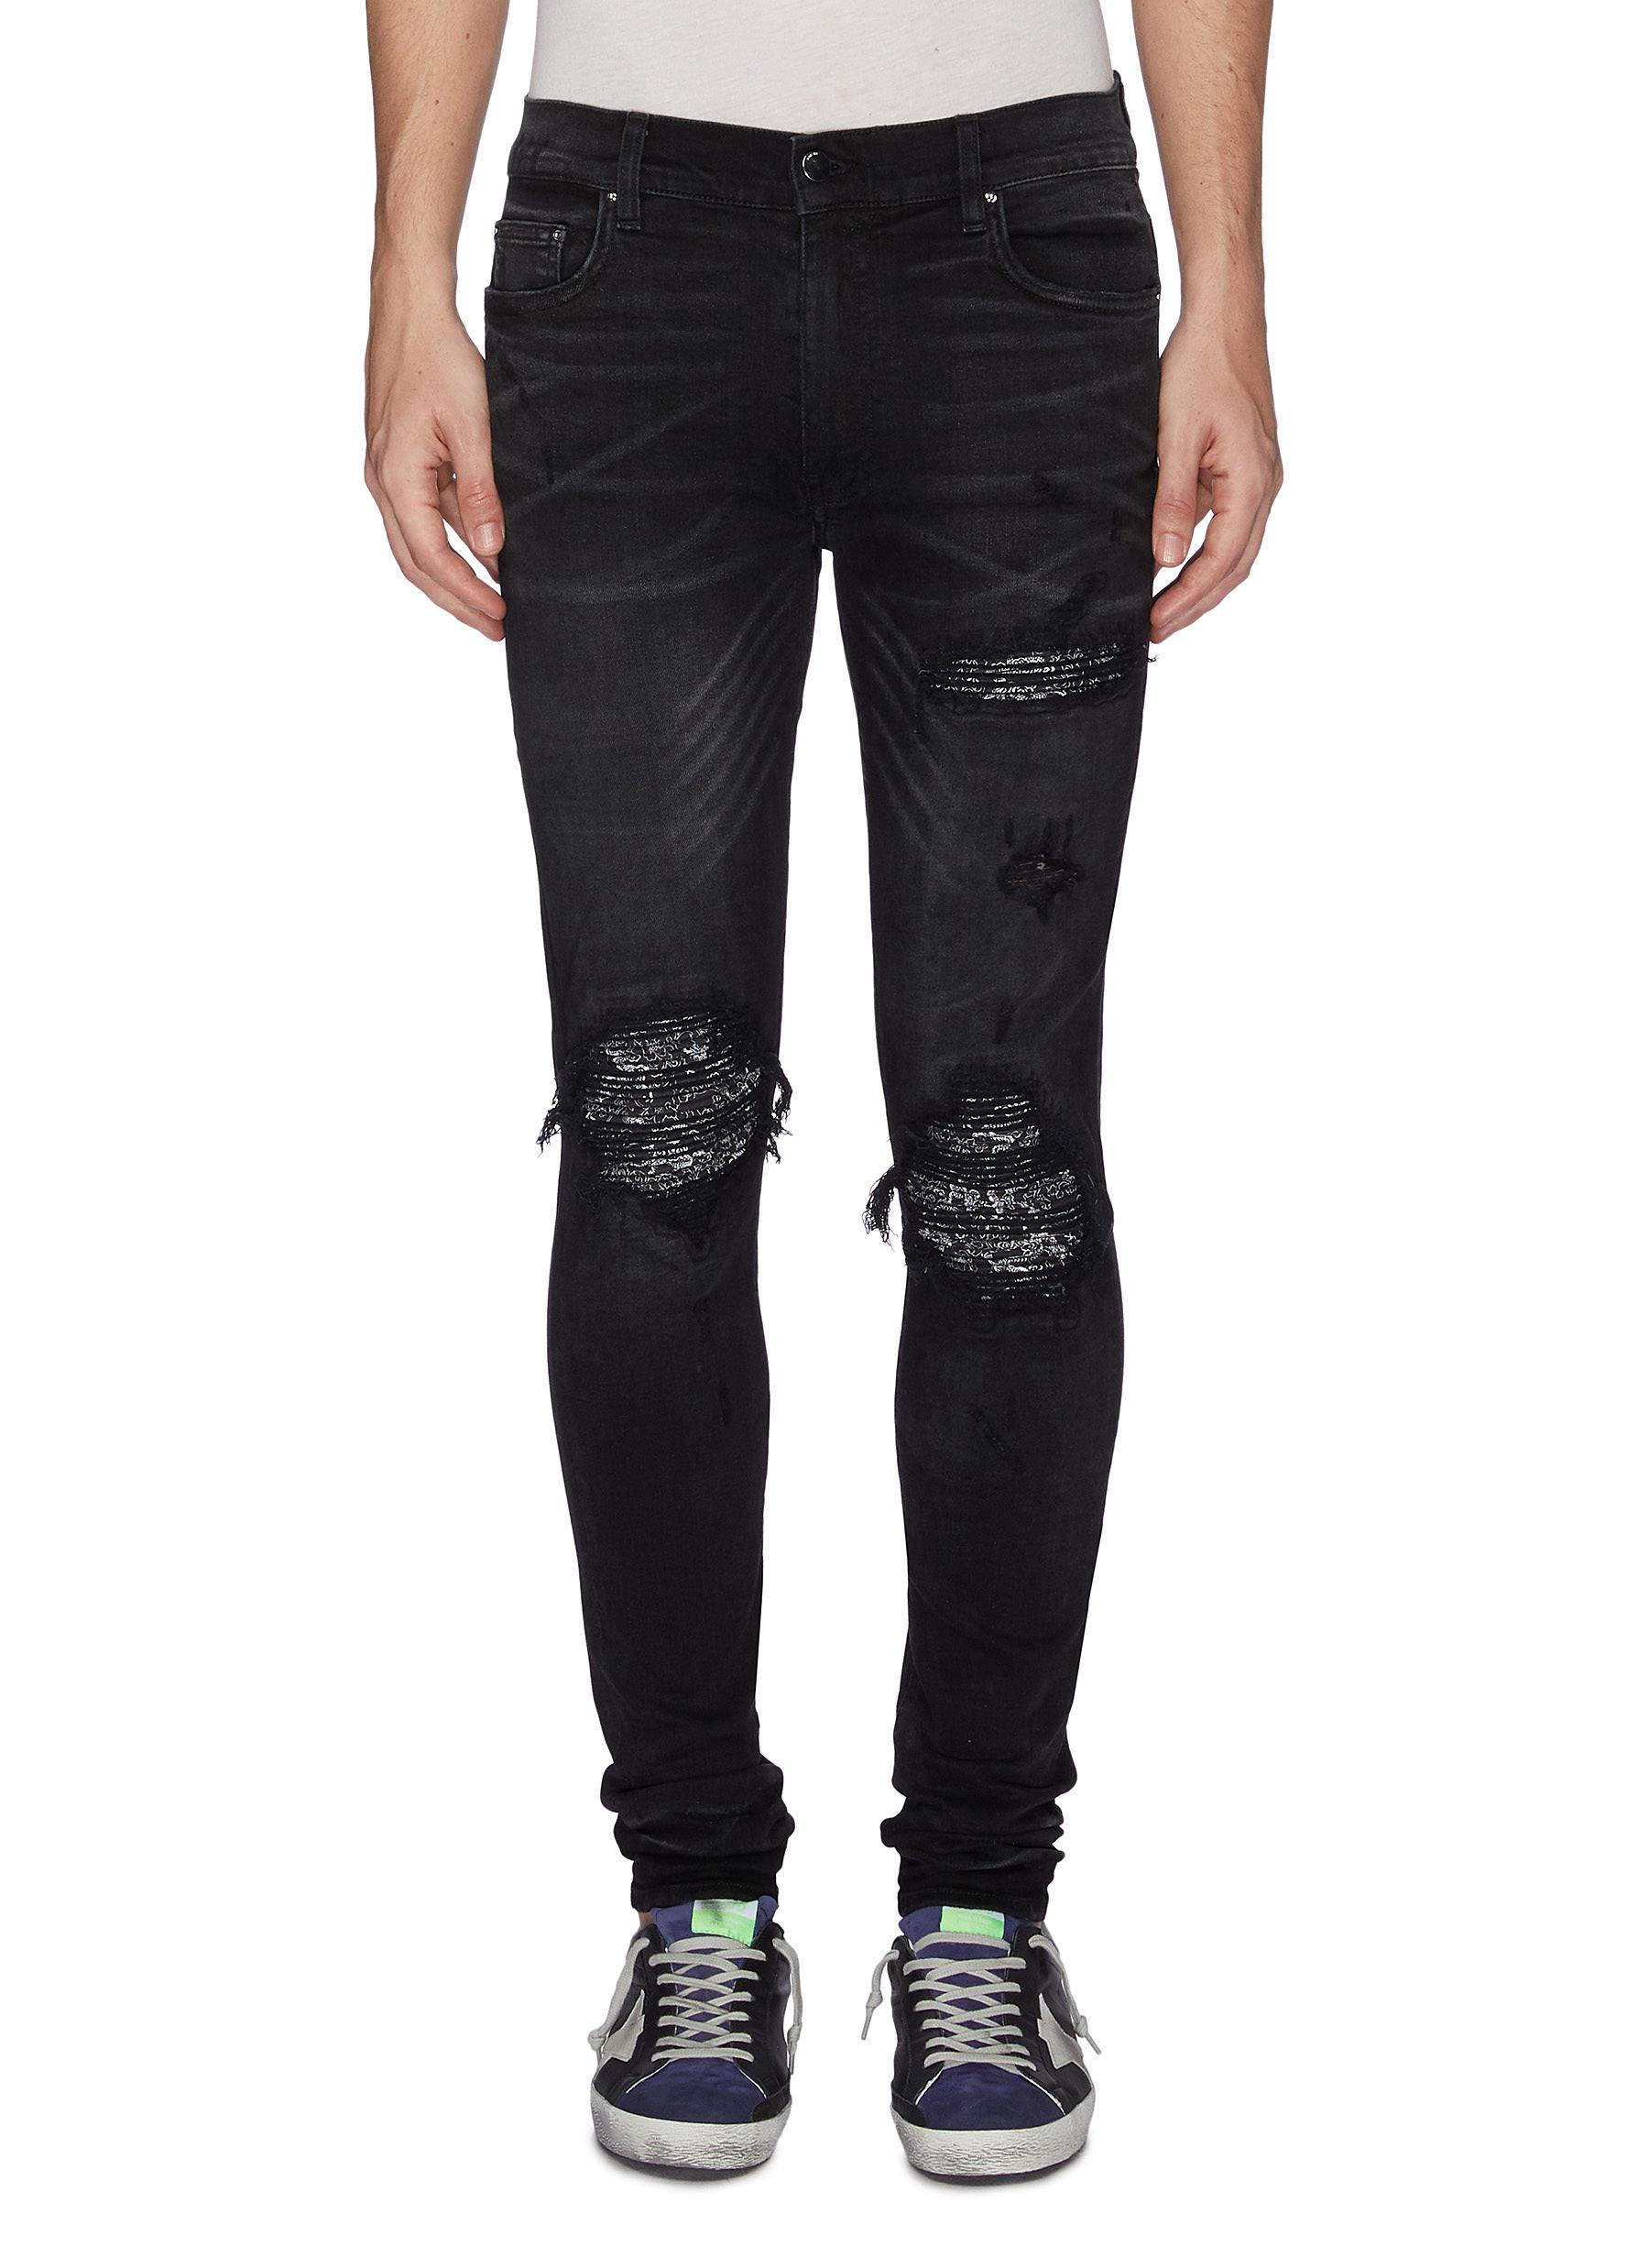 Amiri Denim 'mx1' Bandana Patch Ripped Skinny Jeans in Black for Men - Lyst